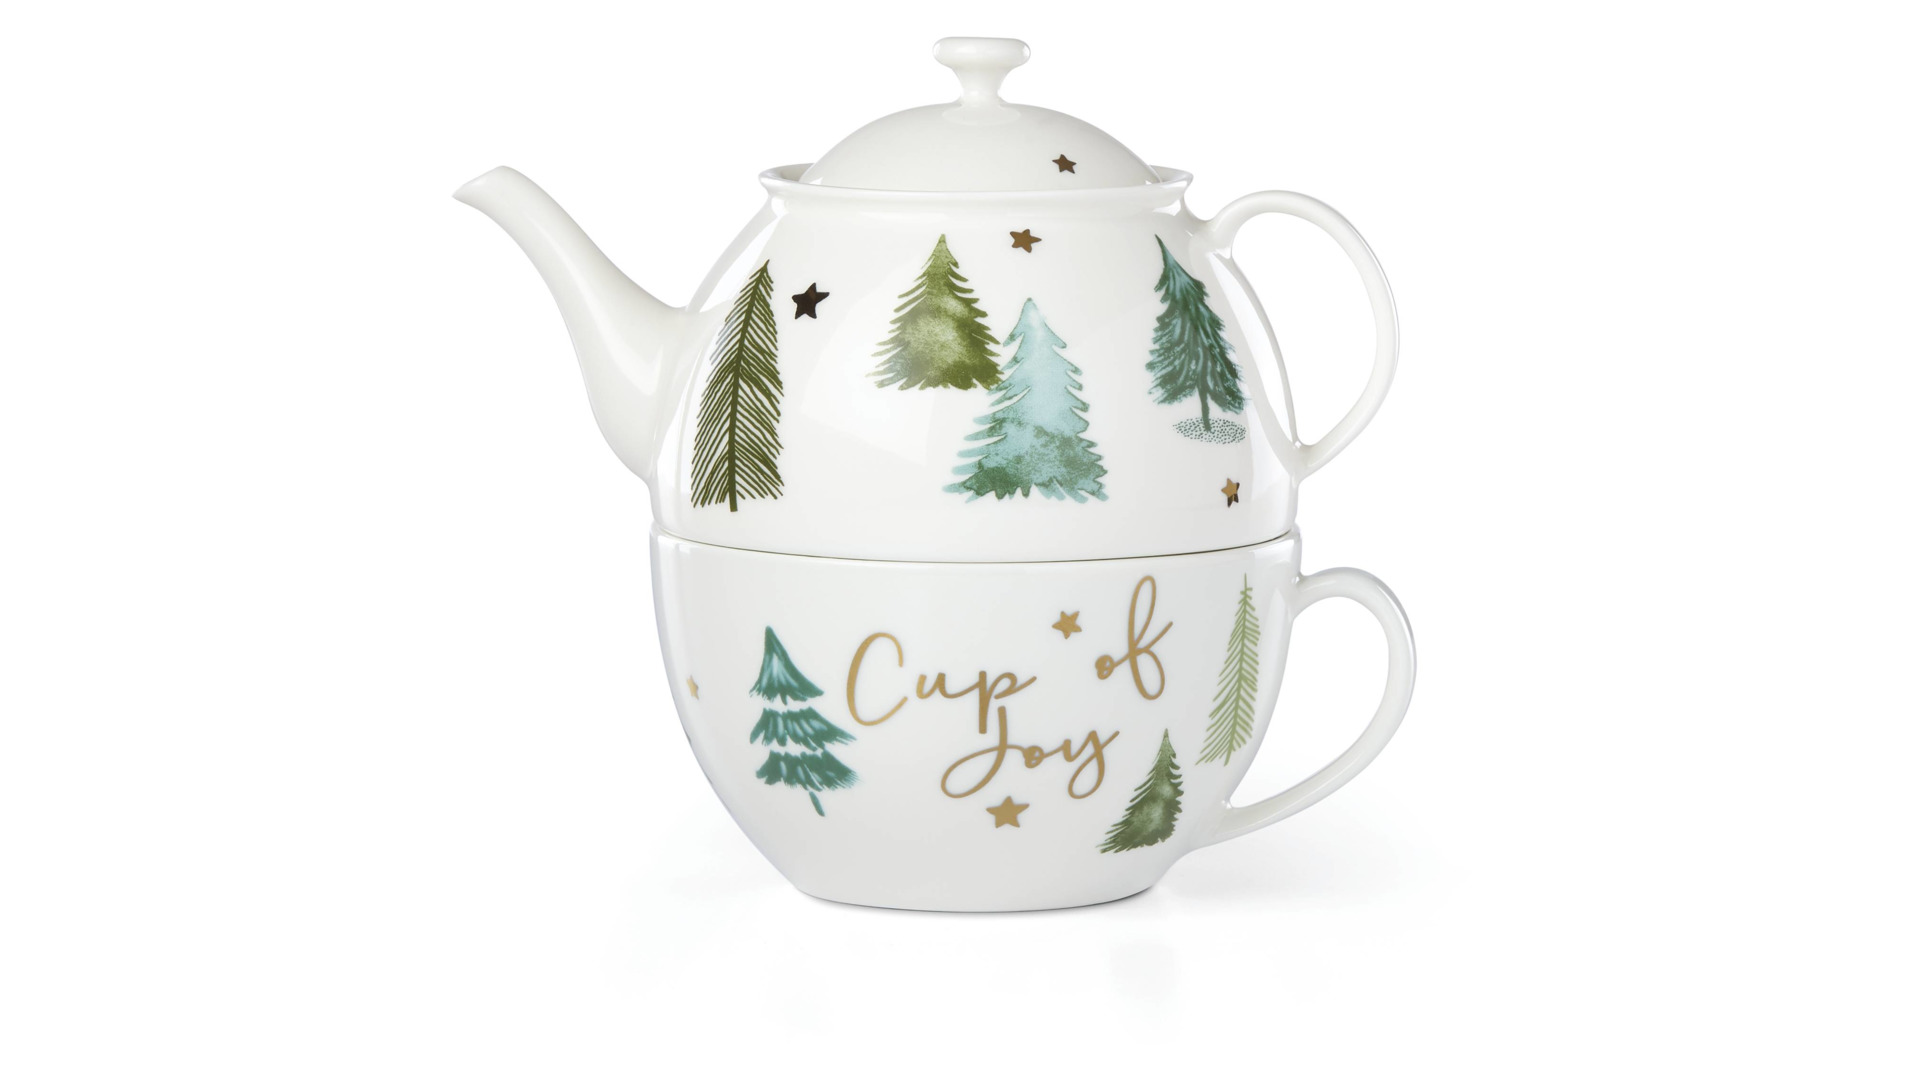 Набор чайный Lenox Волшебный лес.Эгоист 18 см чайник+чашка